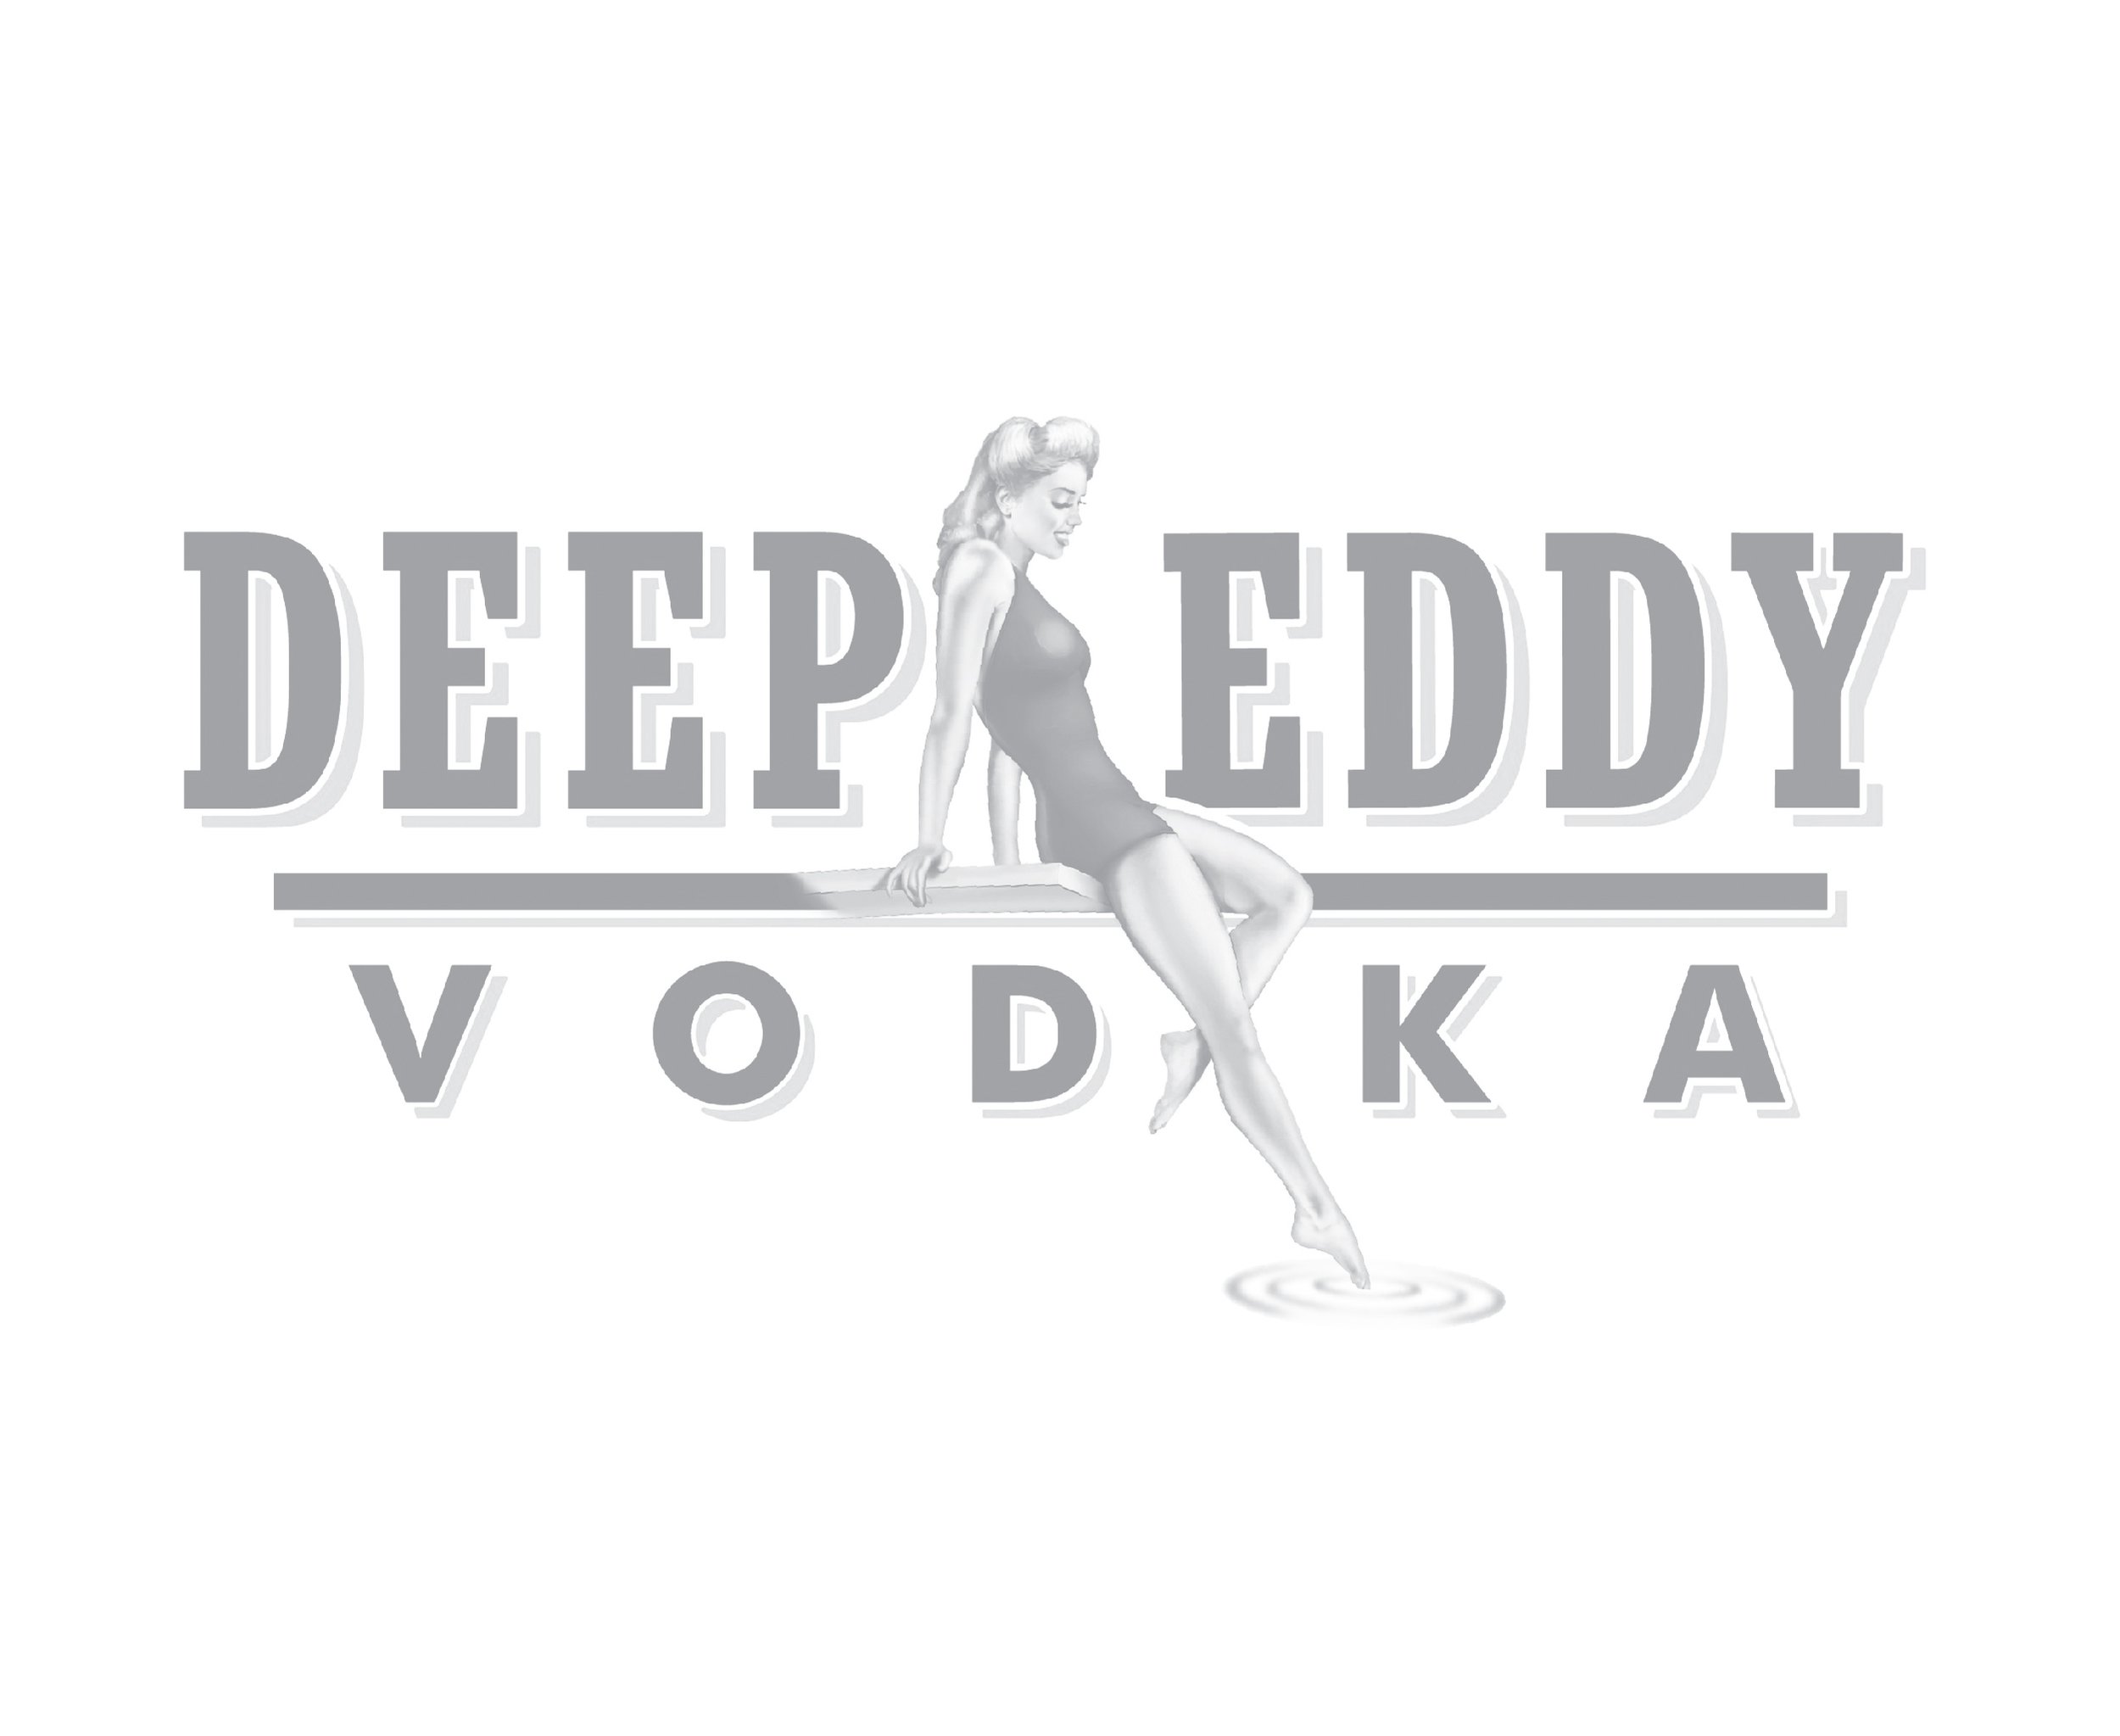 deep eddy vodka live screen printing